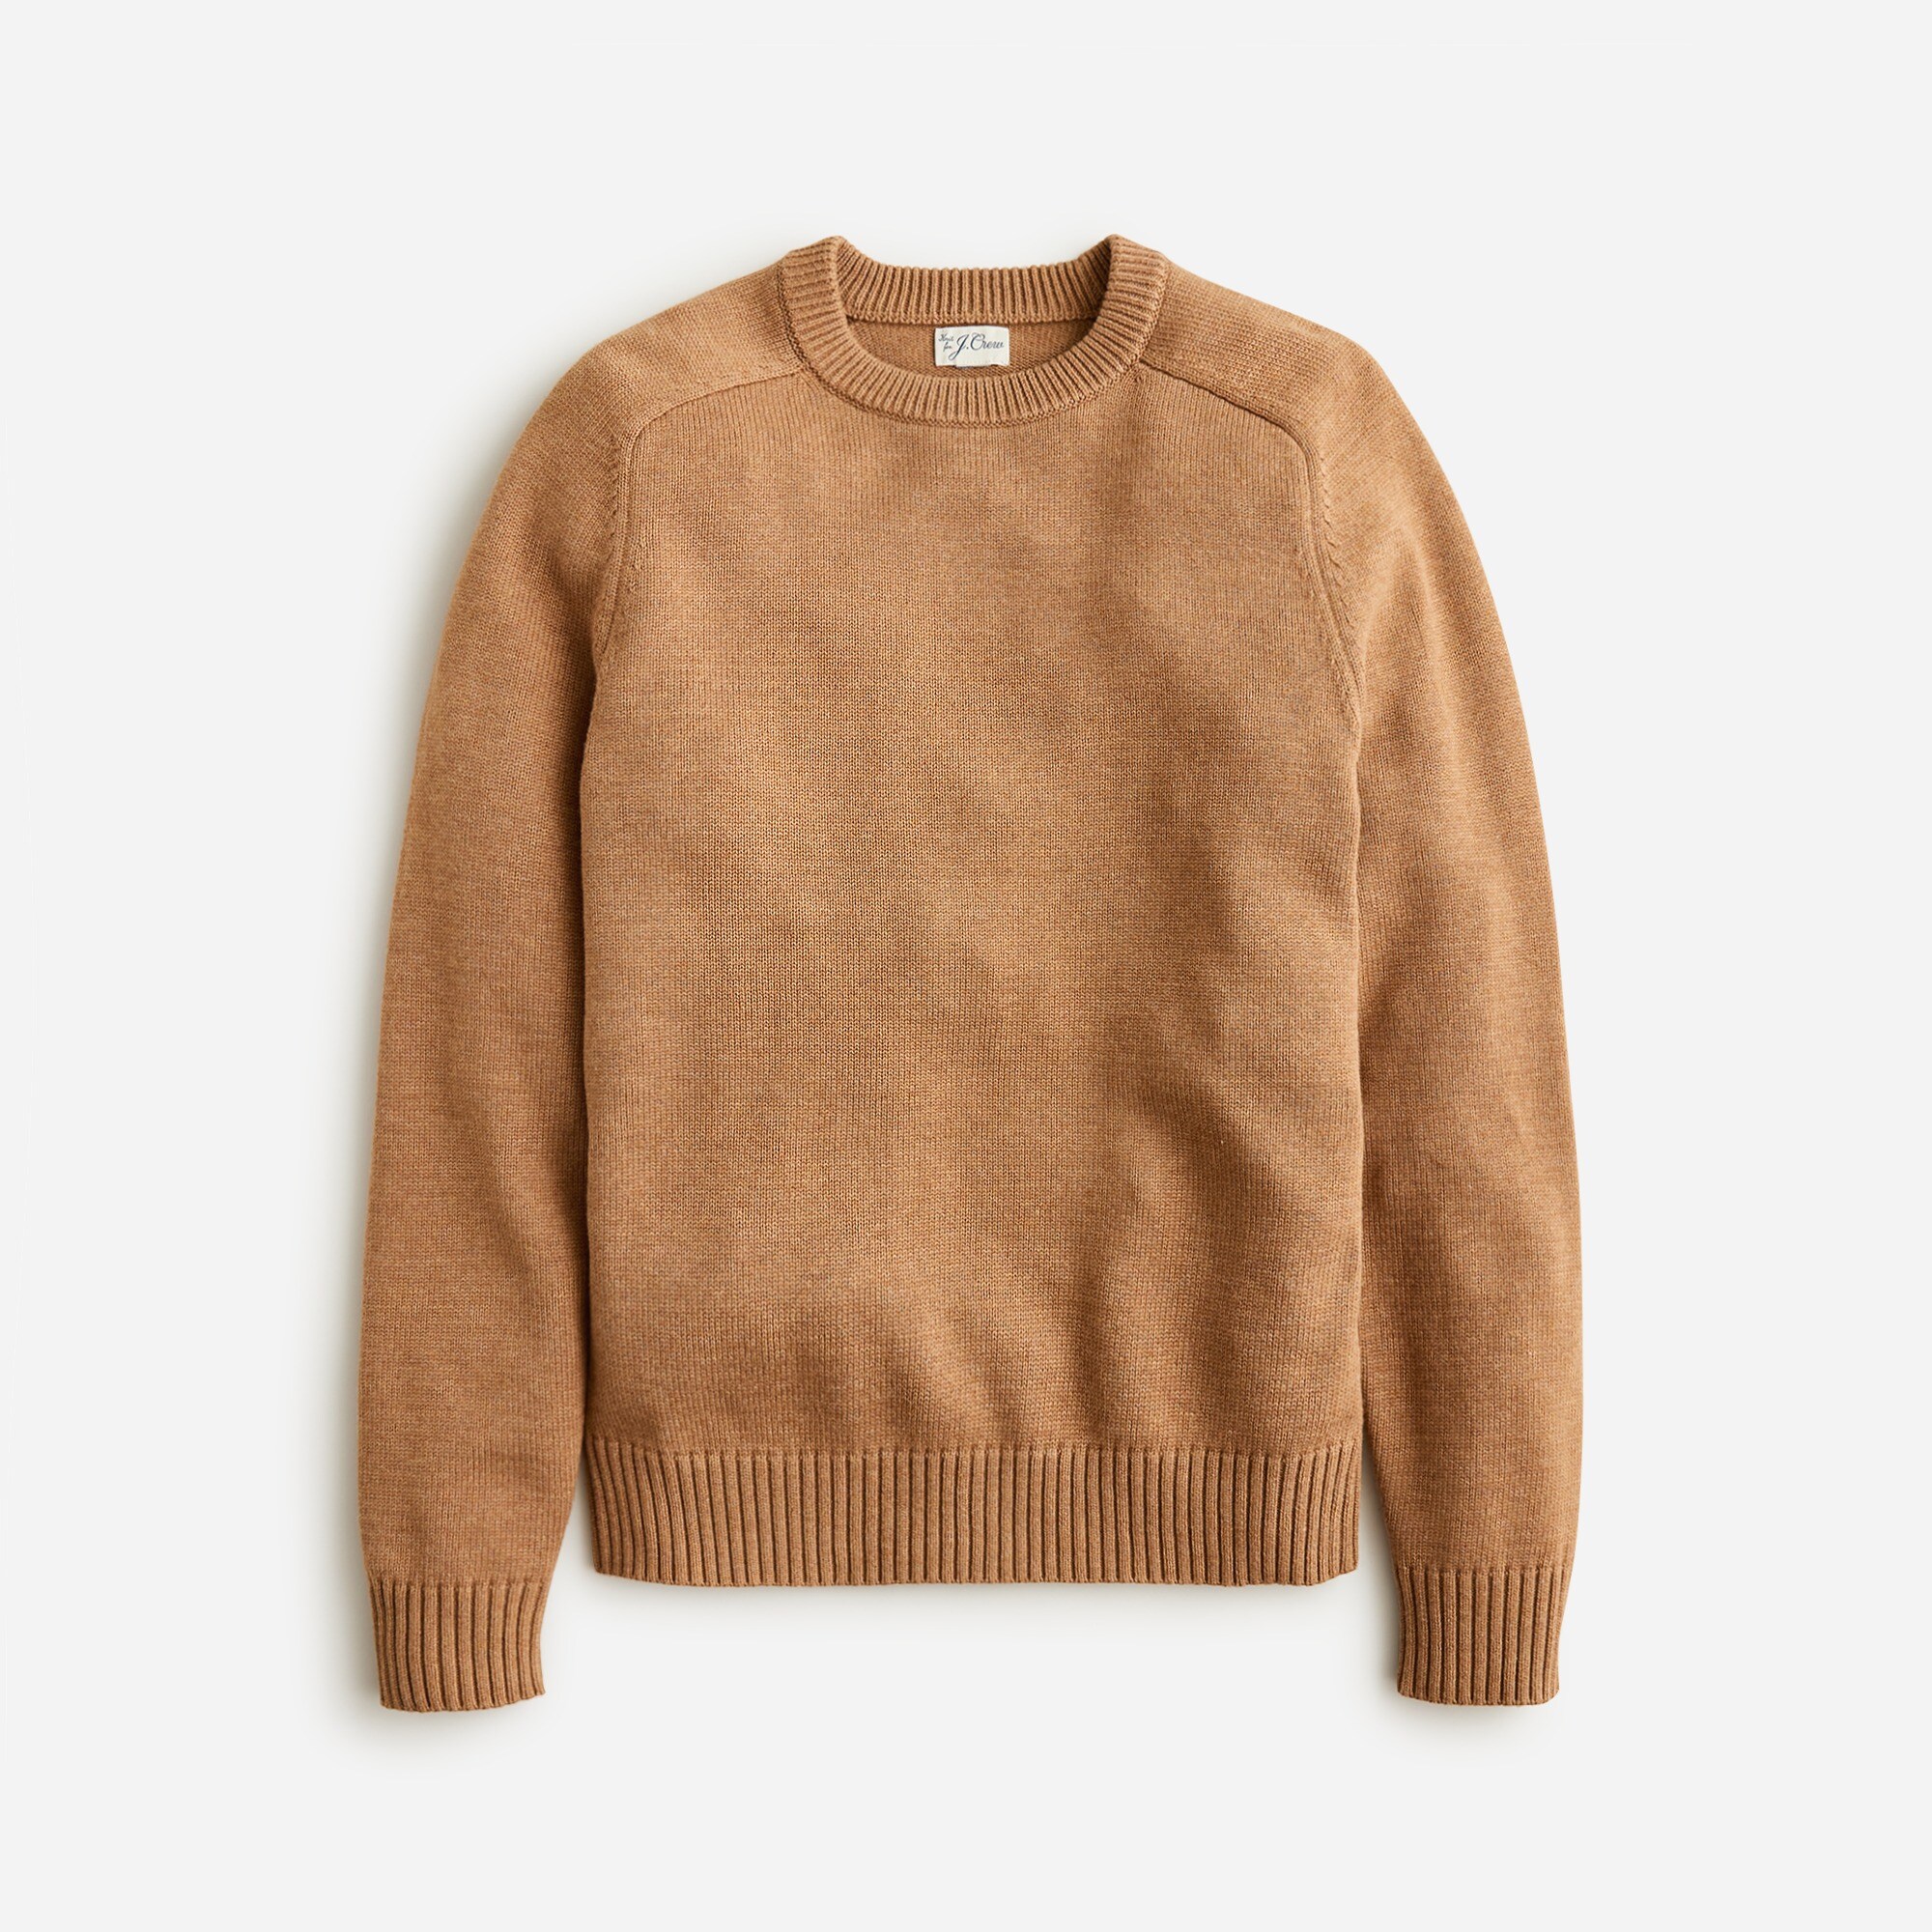  Heritage cotton crewneck sweater